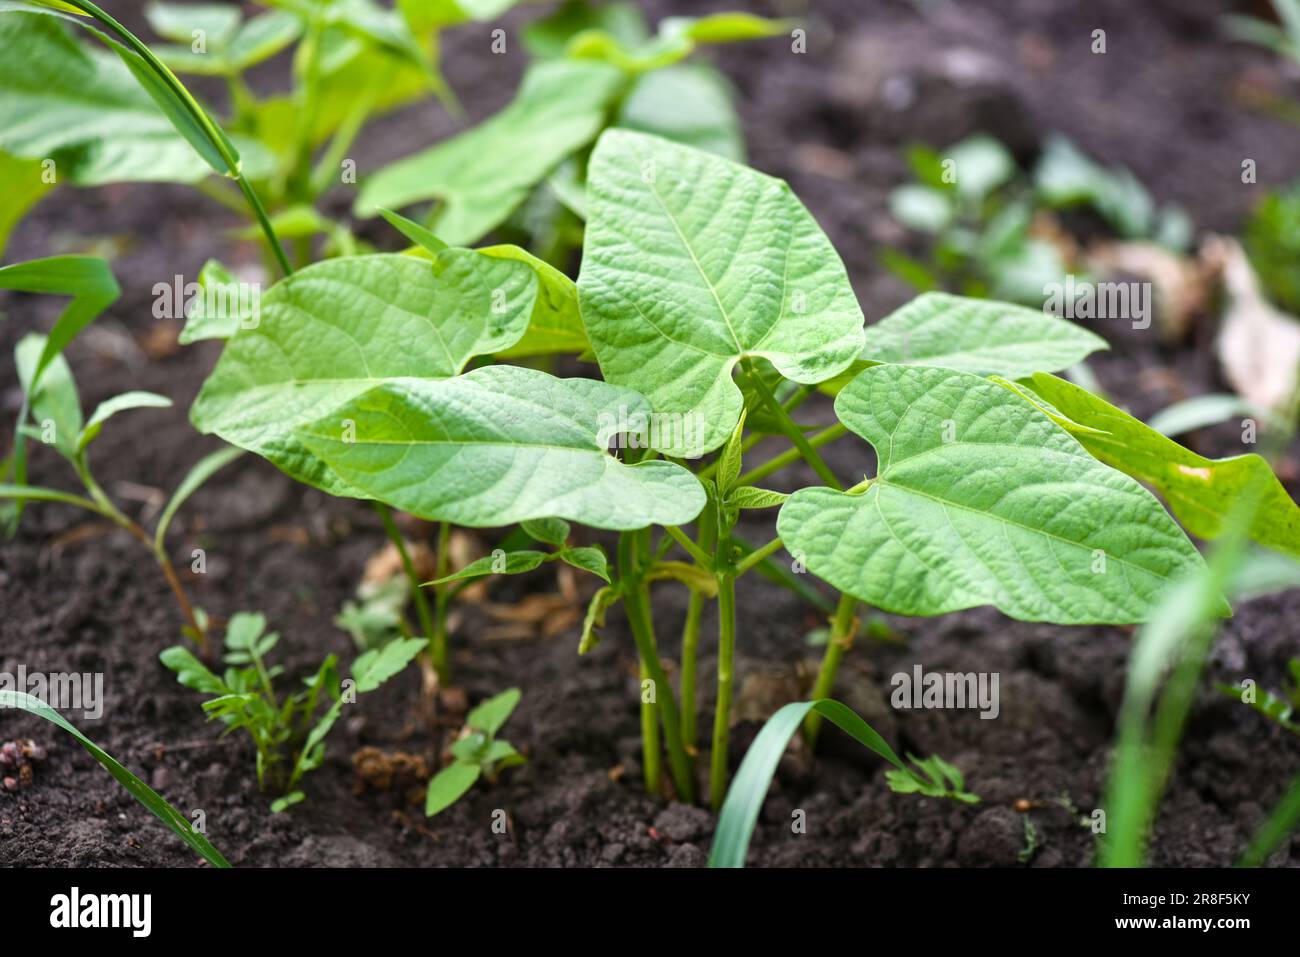 Zimmerman Farms Bean Sprouts Reviews | abillion